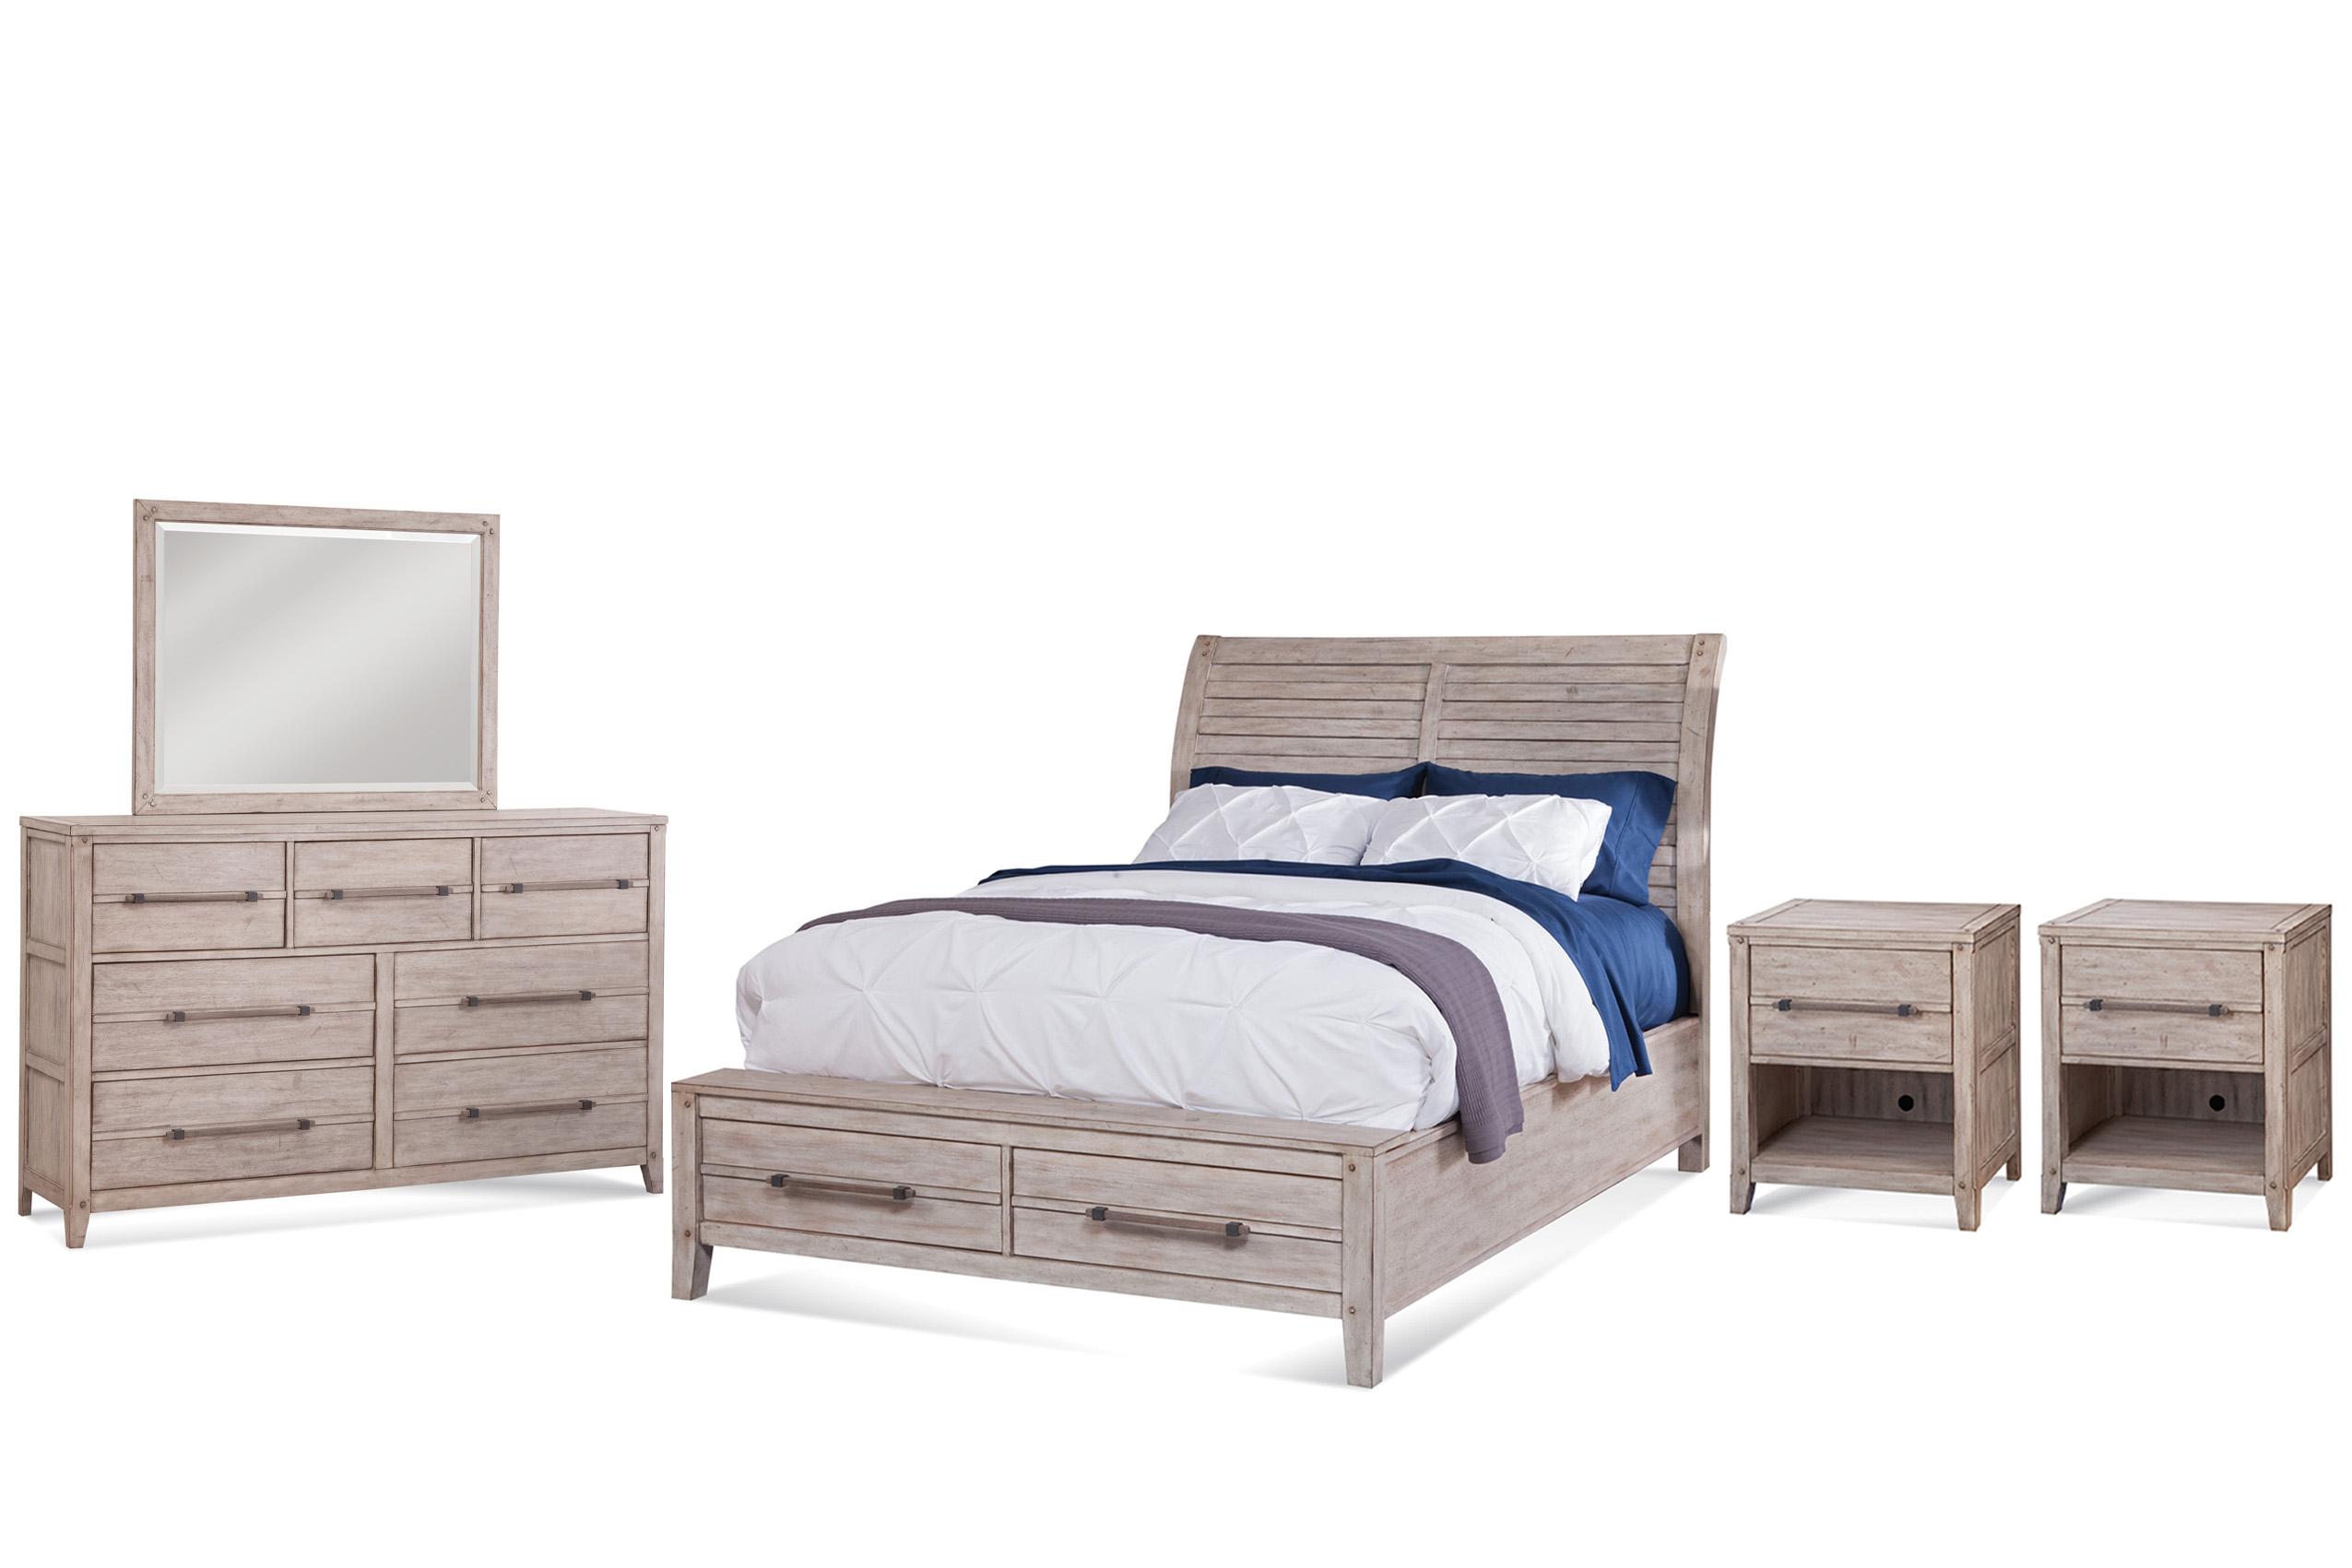 Classic, Traditional Sleigh Bedroom Set AURORA 2810-66PSB 2810-66PSB-2NDM-5PC in whitewash 